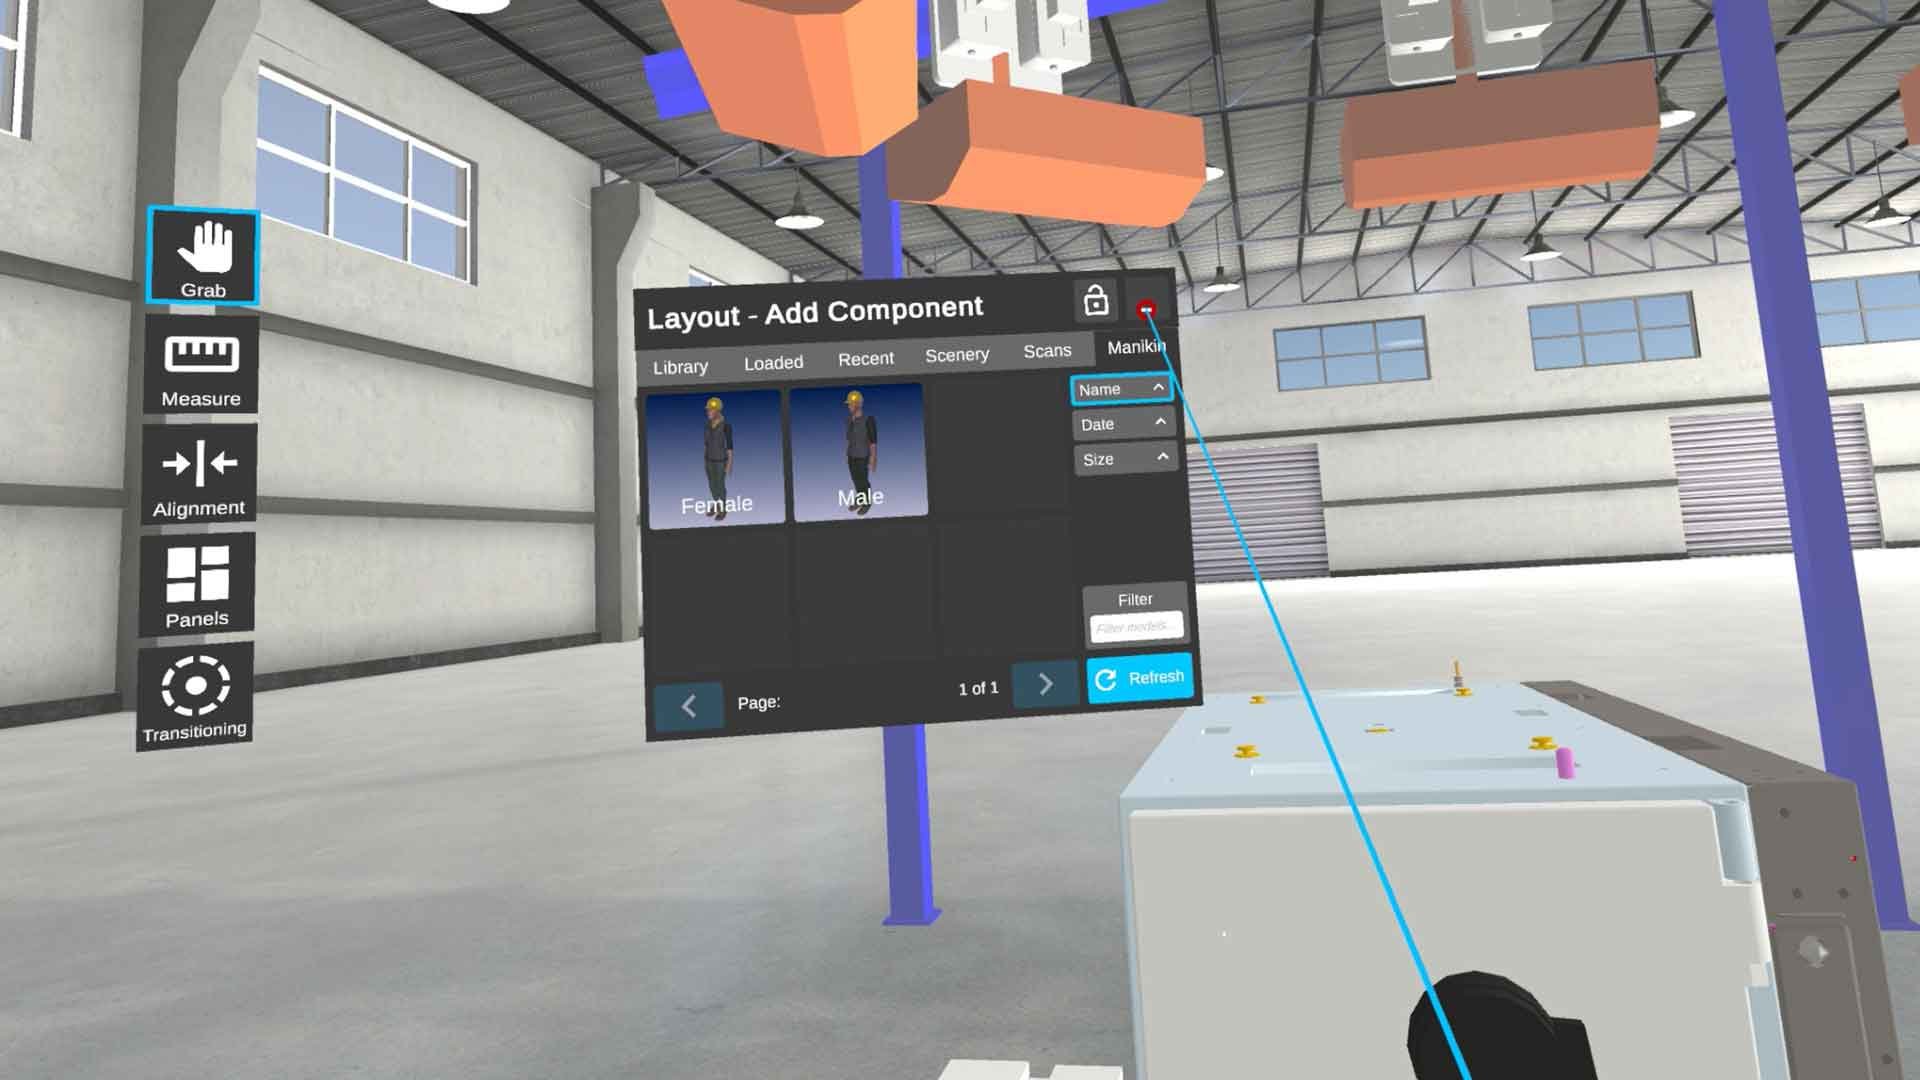 Adding components into virtual reality